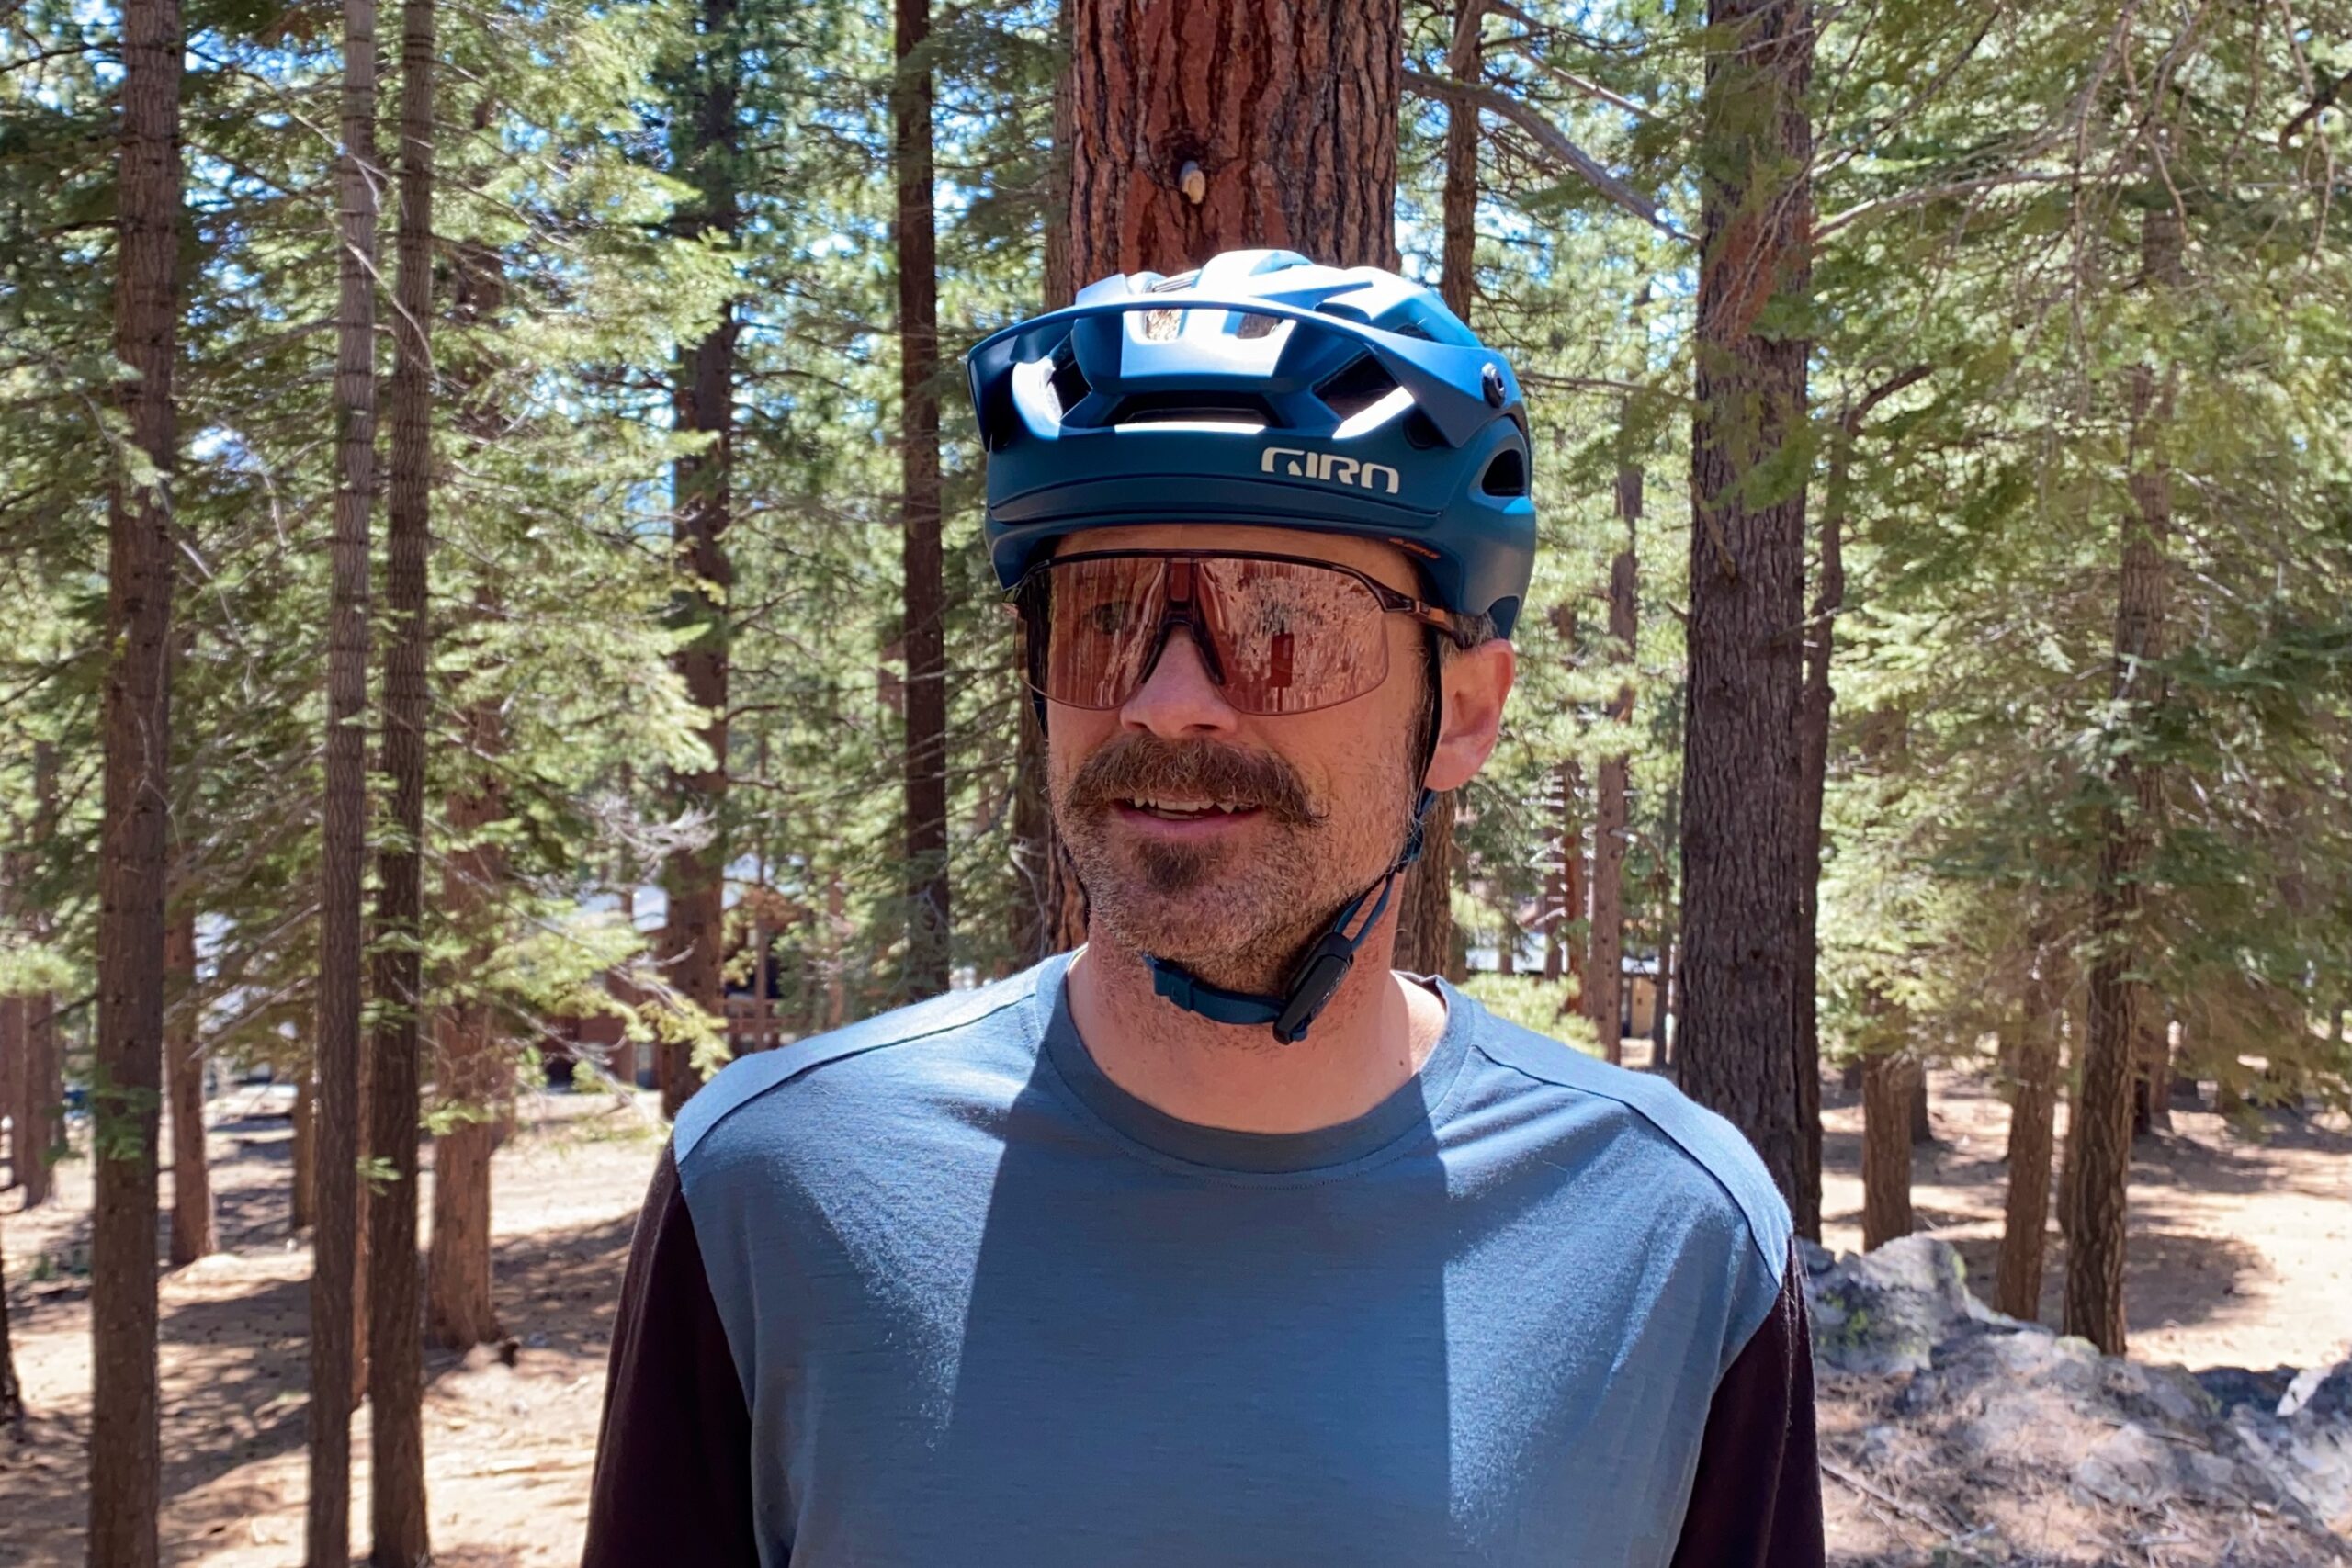 Wearing the Giro Manifest Spherical mountain bike helmet